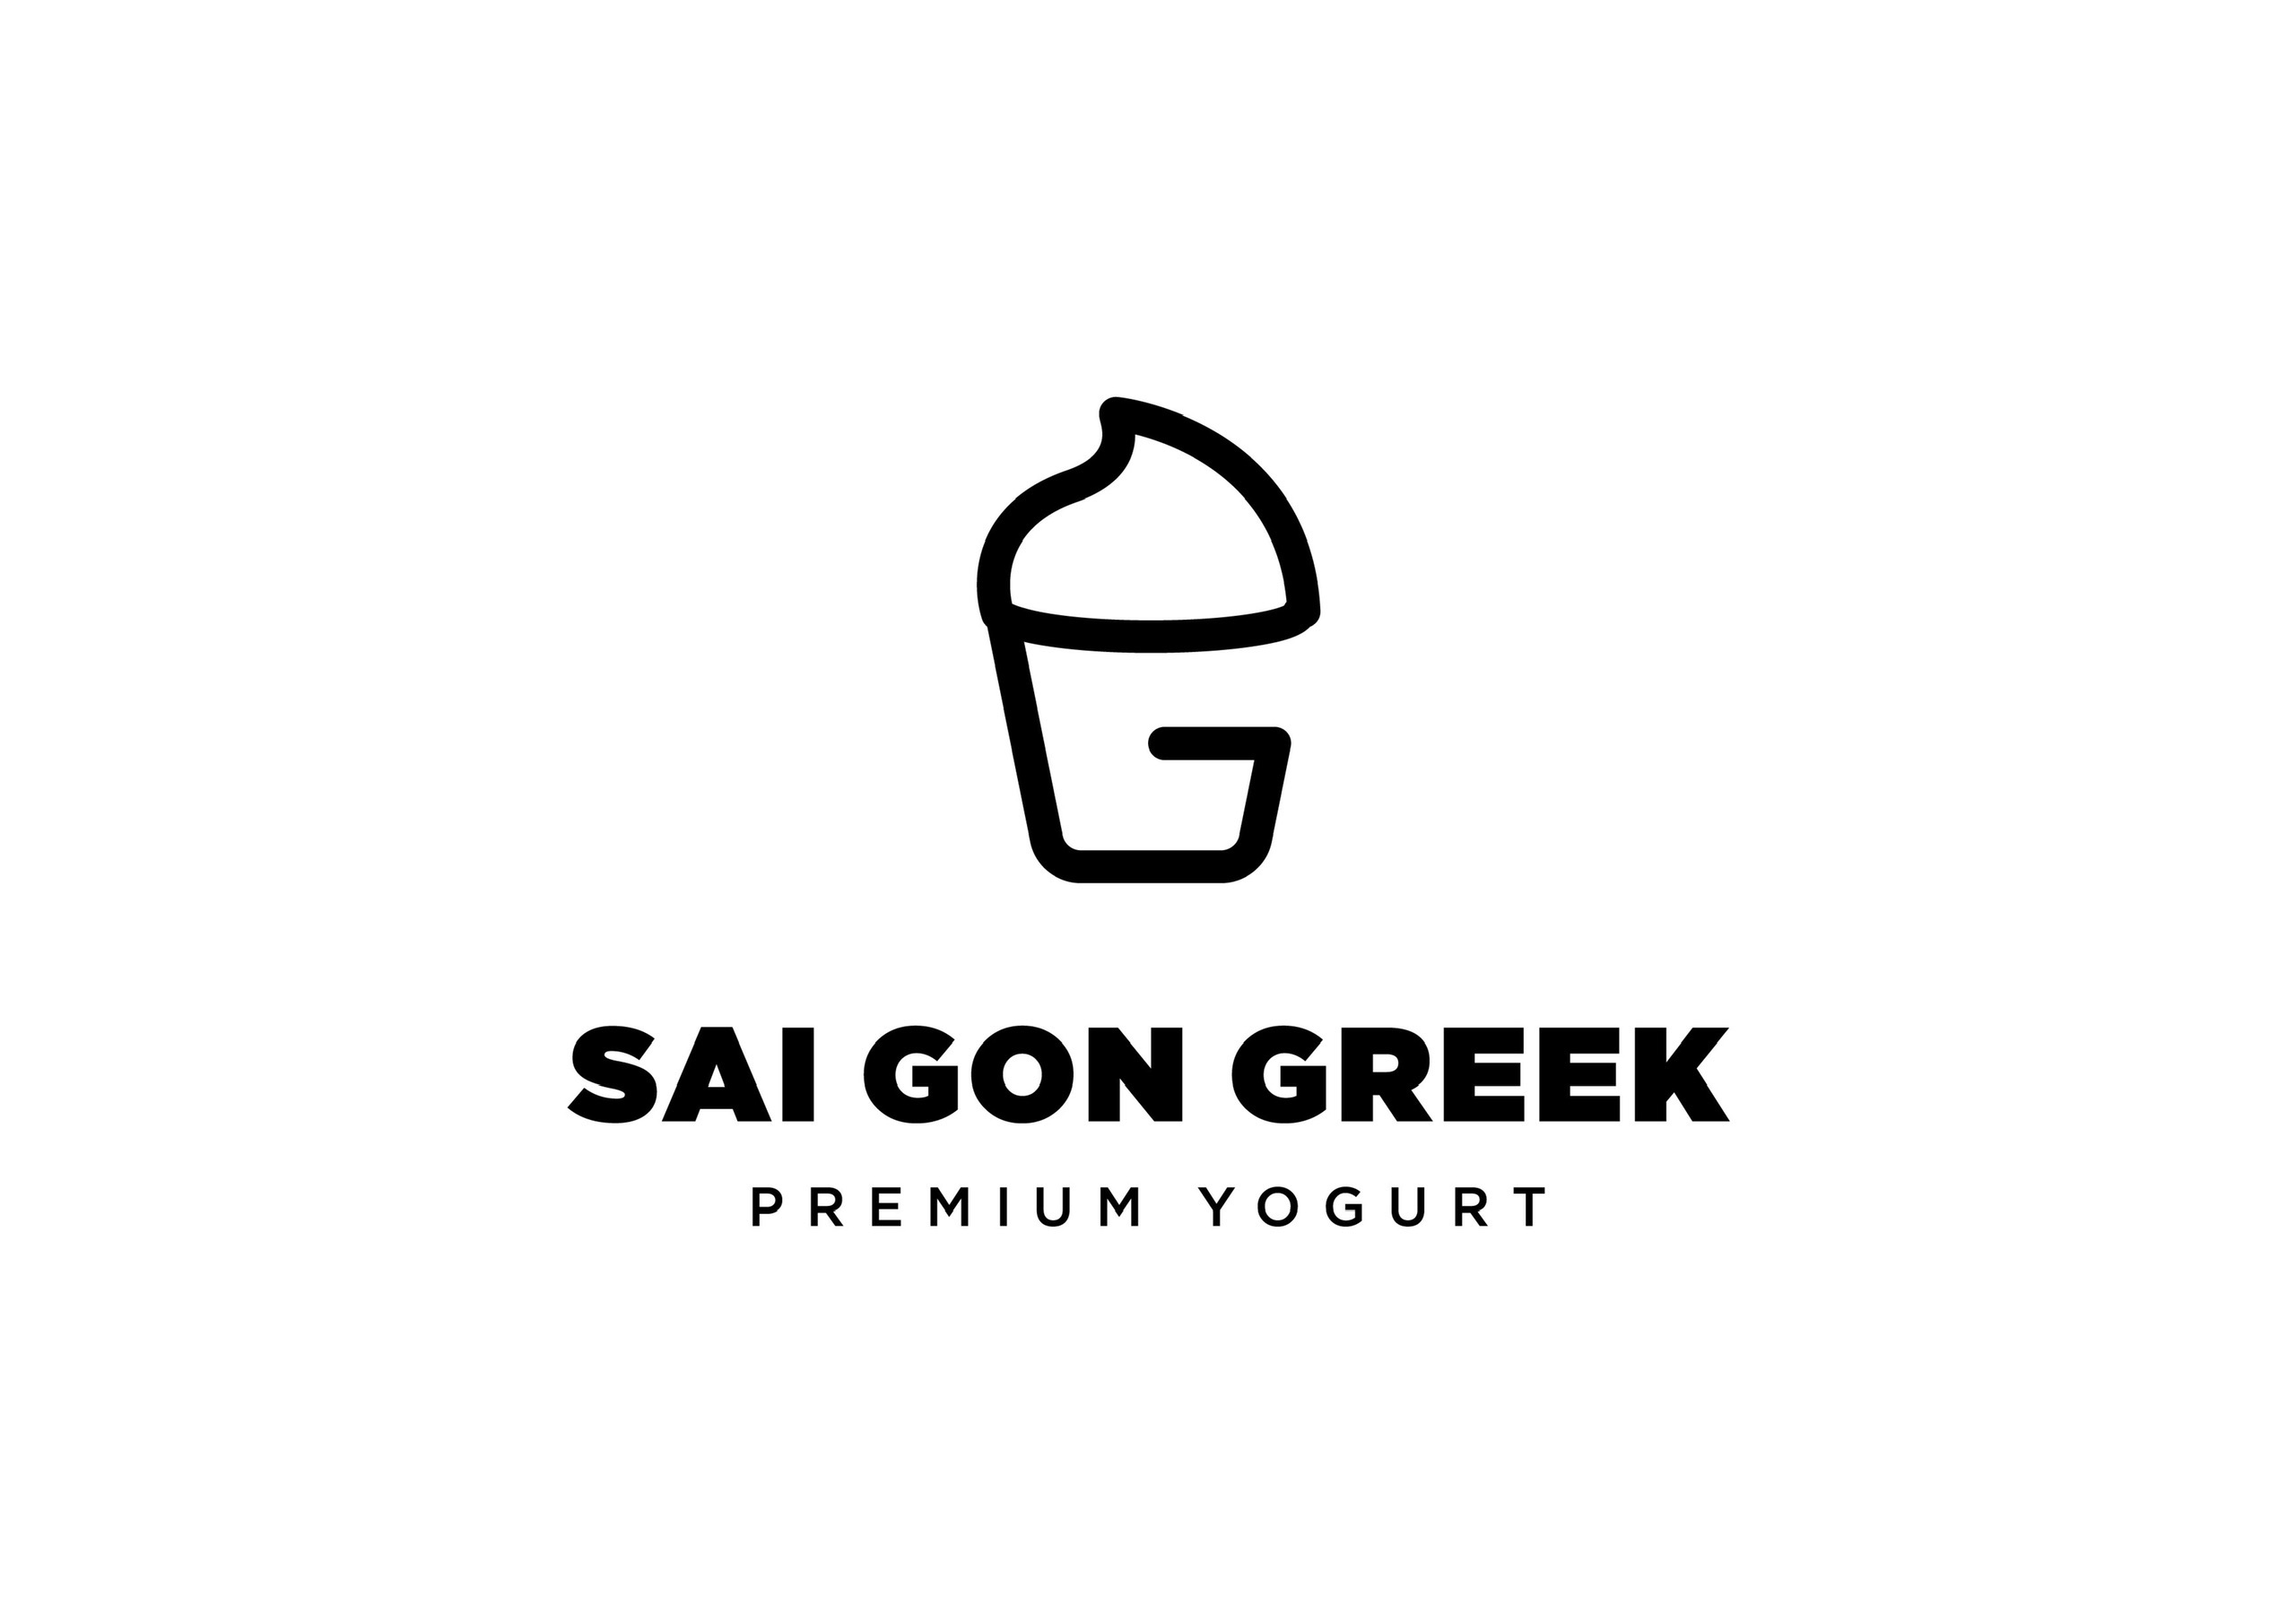 SAIGON GREEK YOGURT